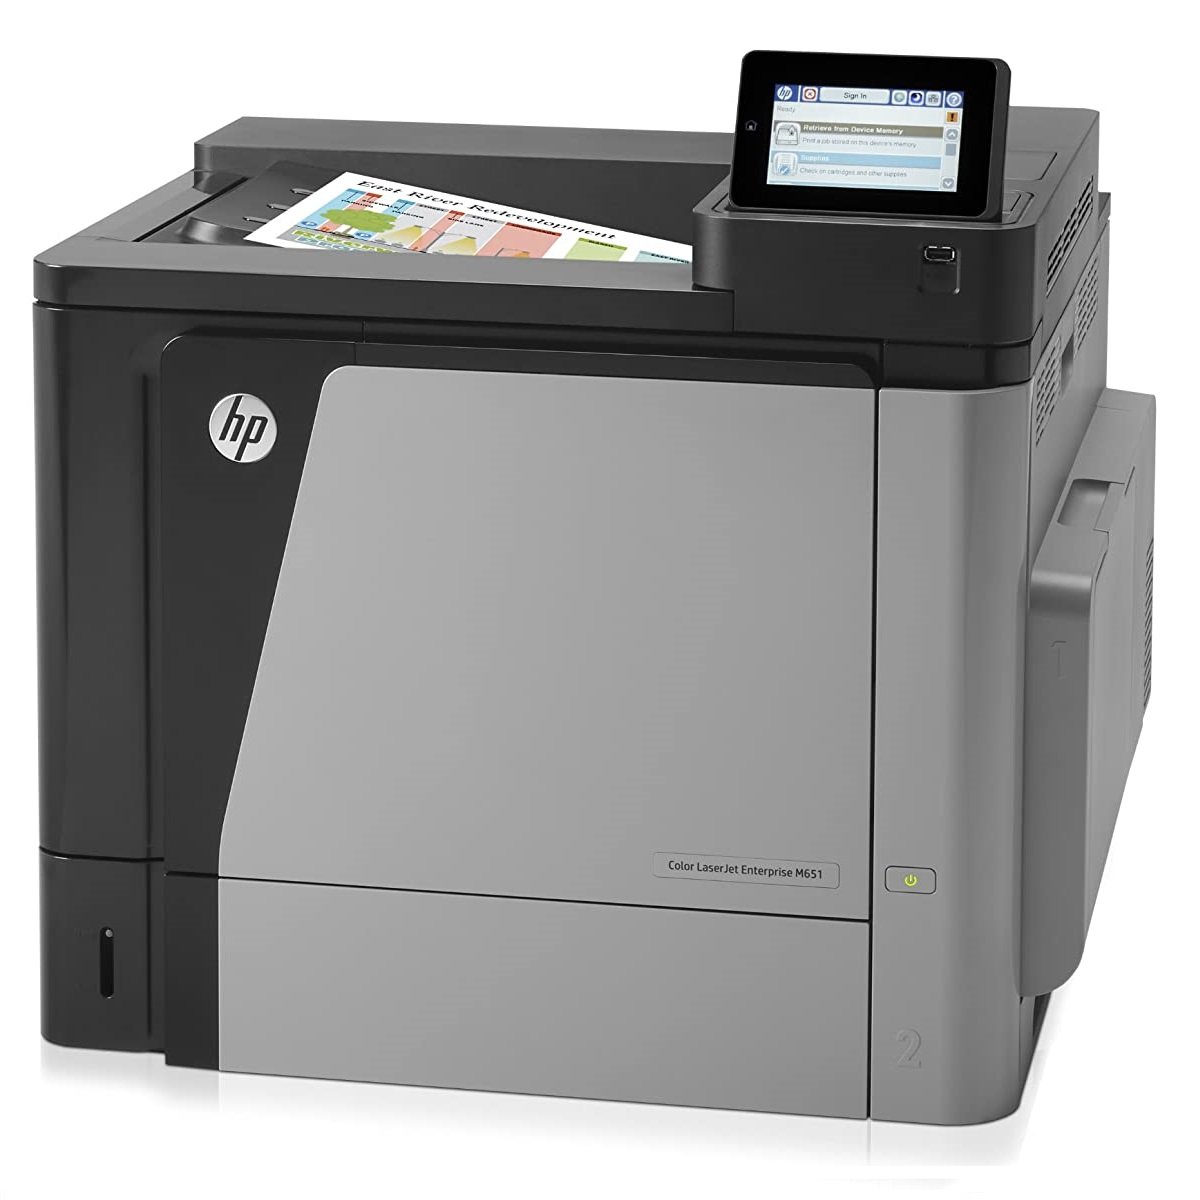 Absolute Toner HP LaserJet Enterprise M651 Color Laser Photo Printer Duplex, Network, Fast & very economical For Office Use Showroom Color Copiers